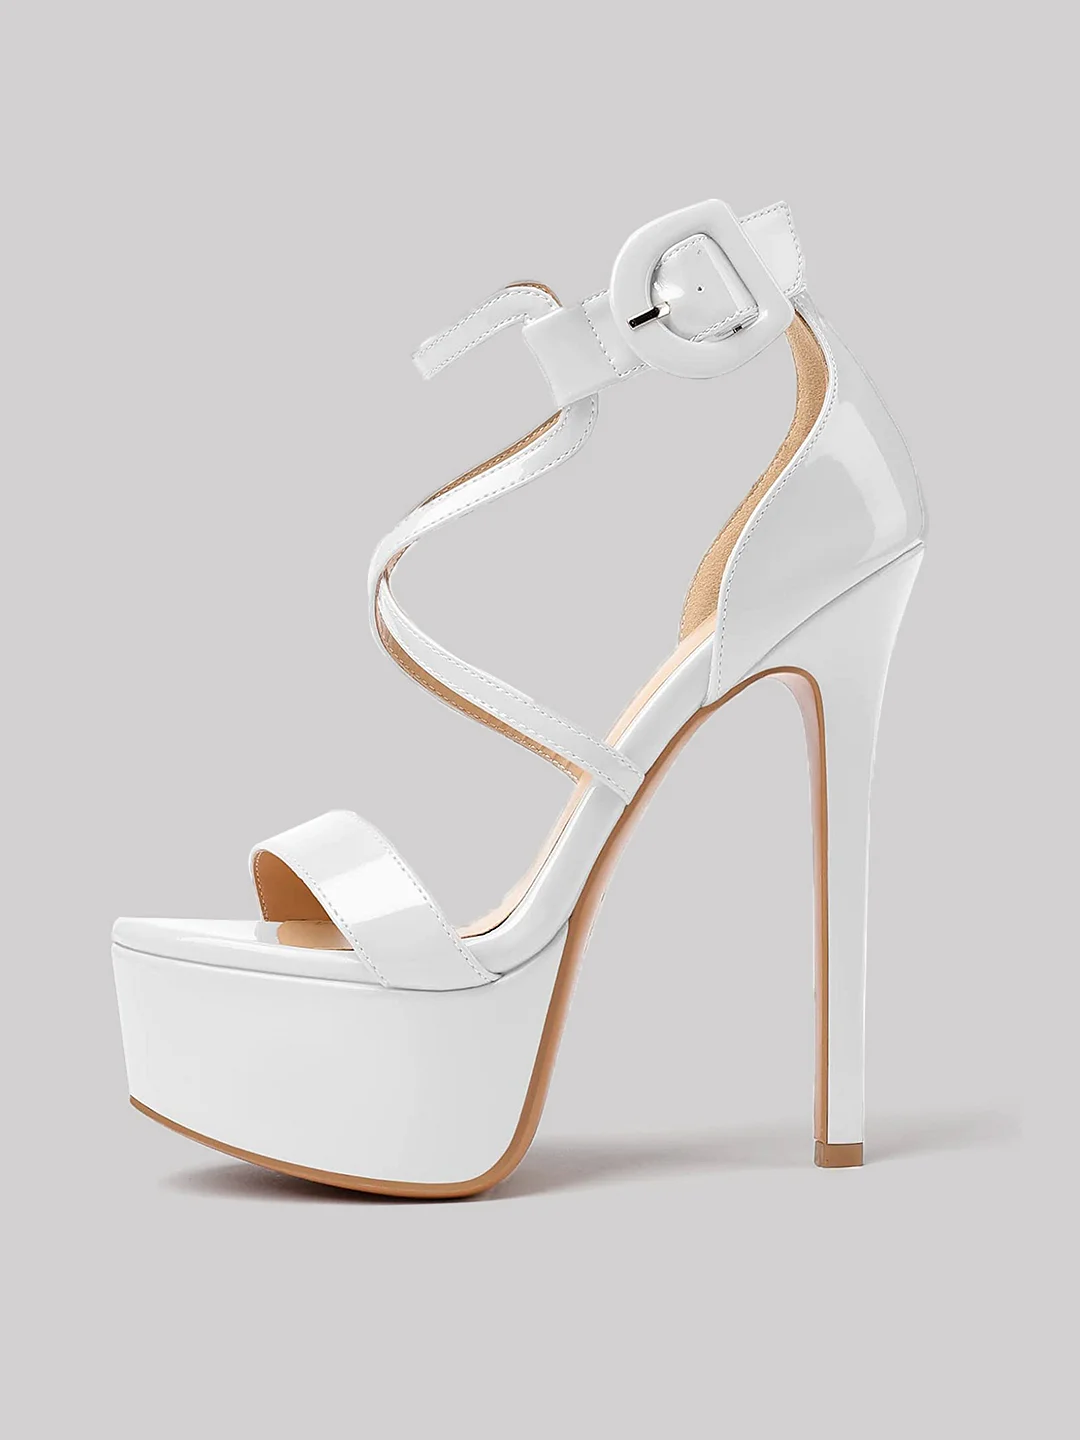 150mm Women's Open Toe Platform Sandals Ankle Strap High Heel Patent Summer Shoes